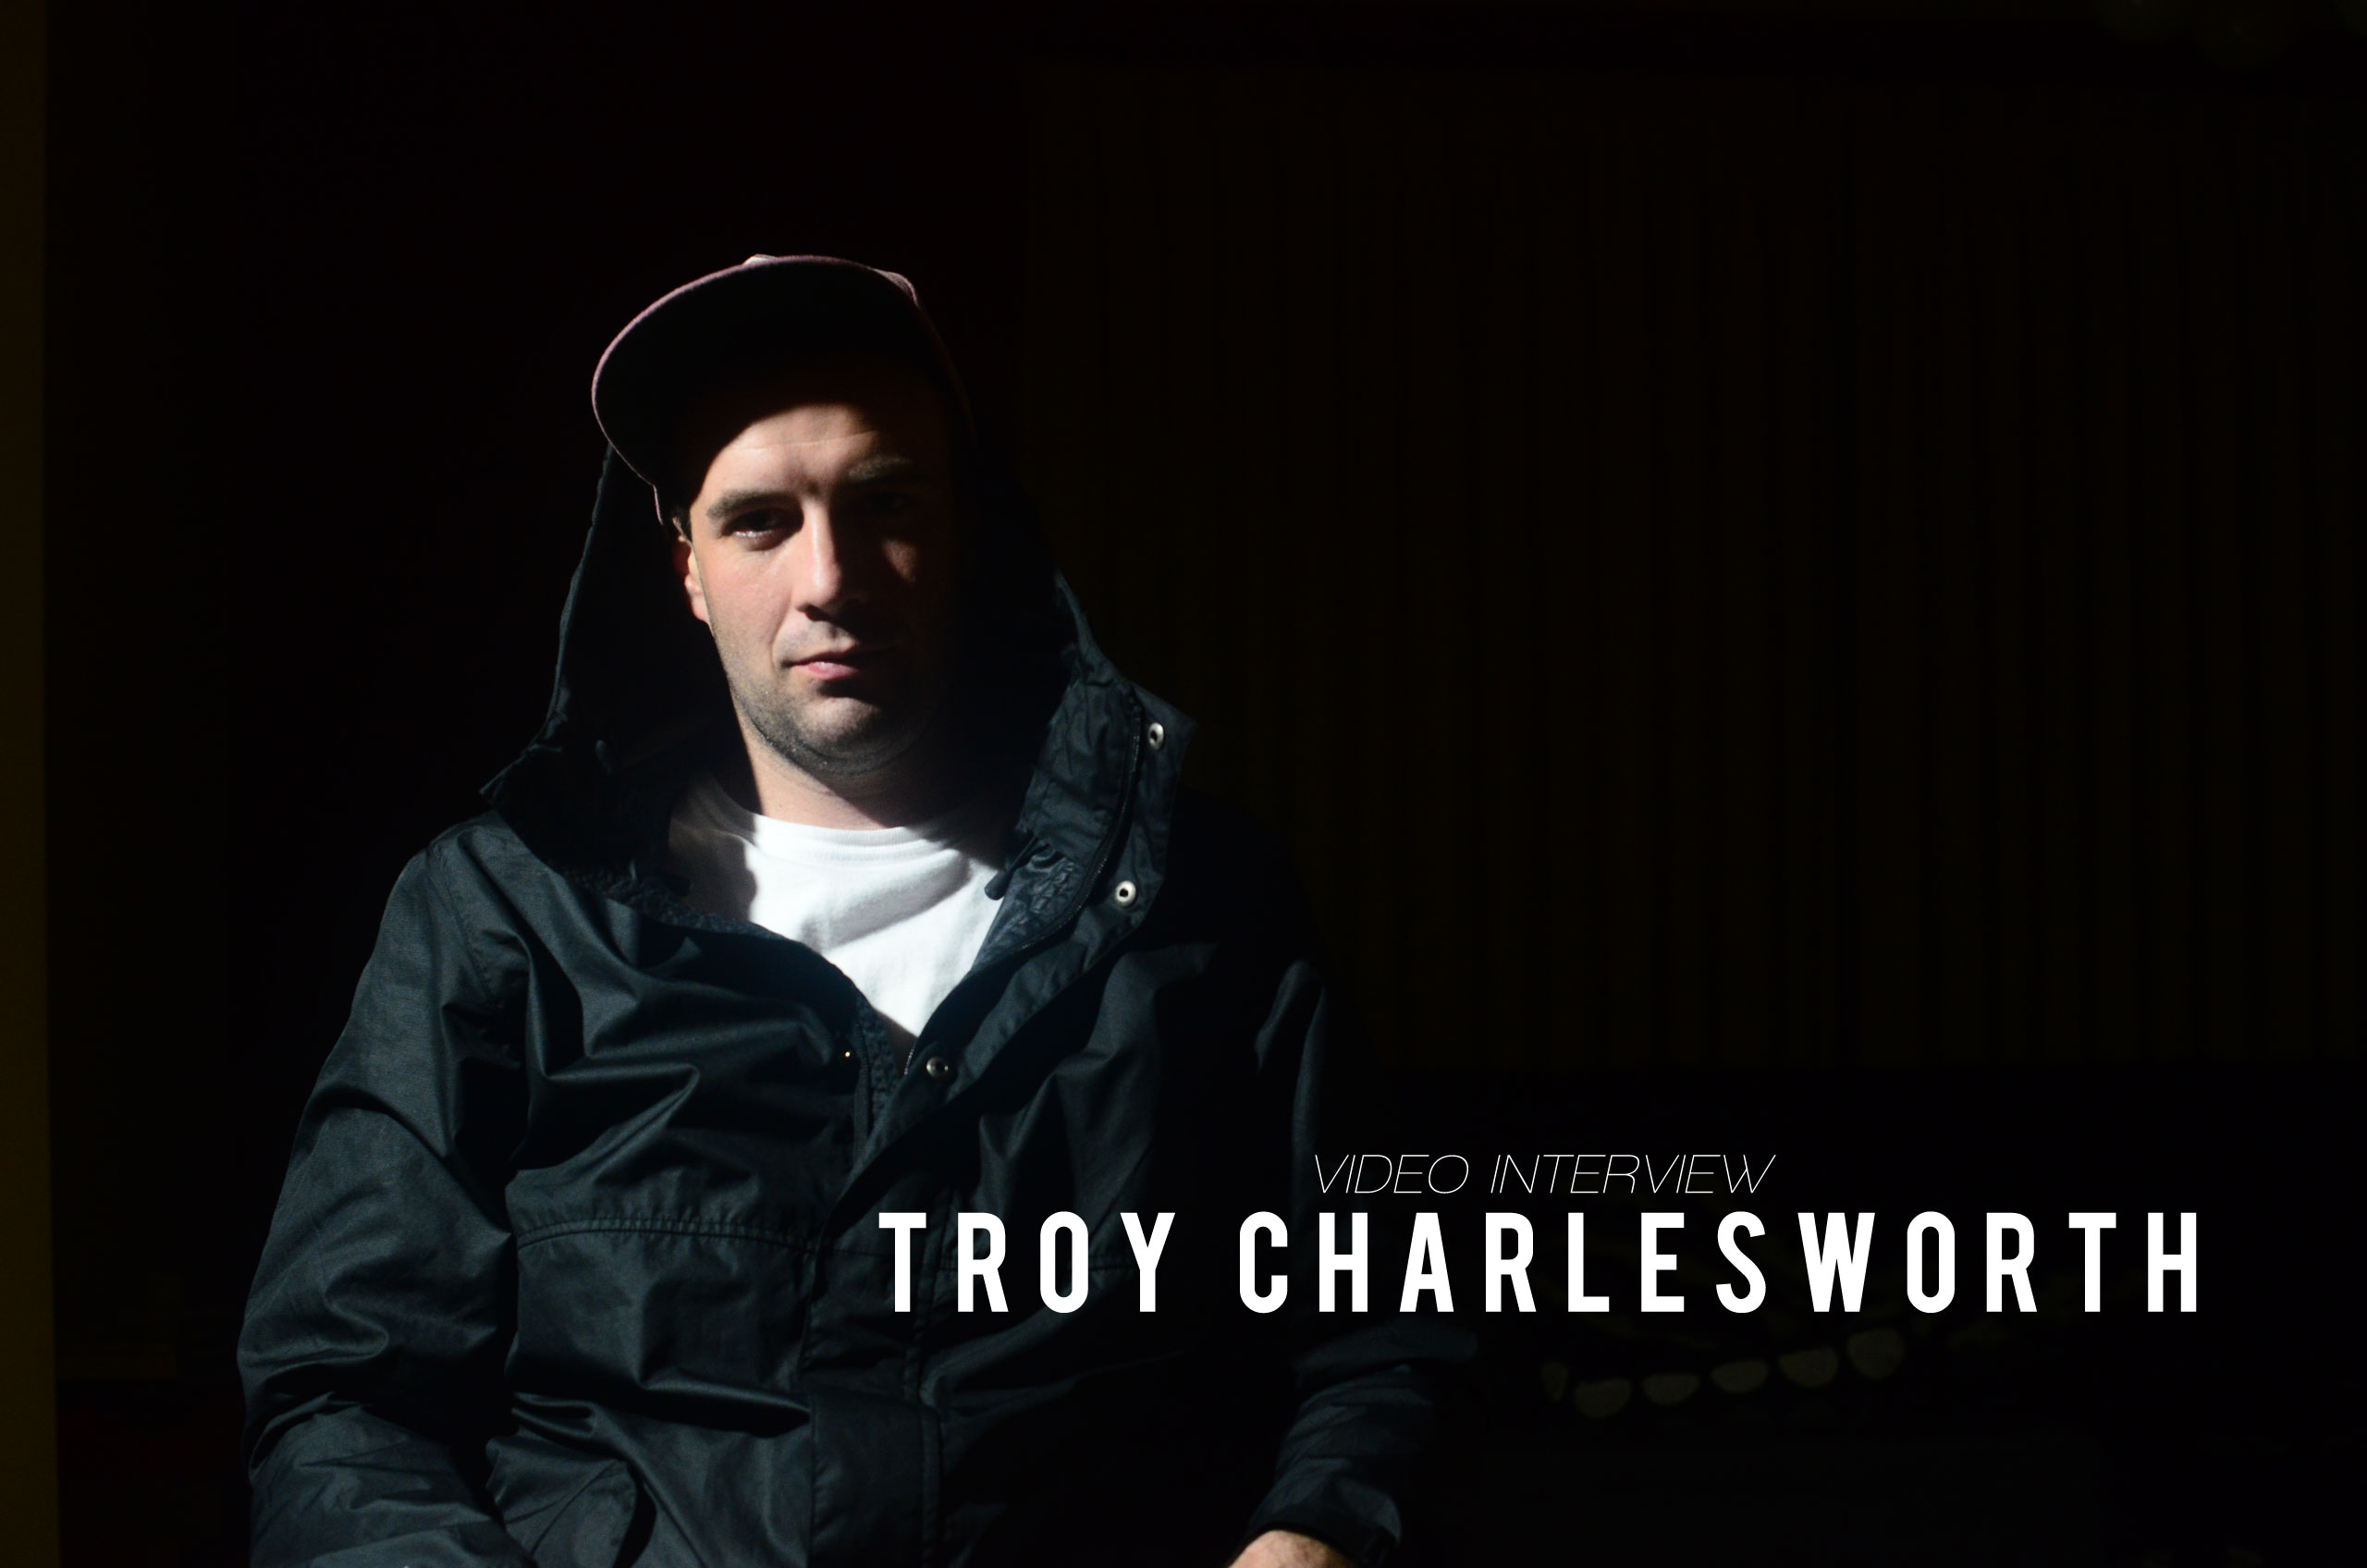 Video Interview // Troy Charlesworth